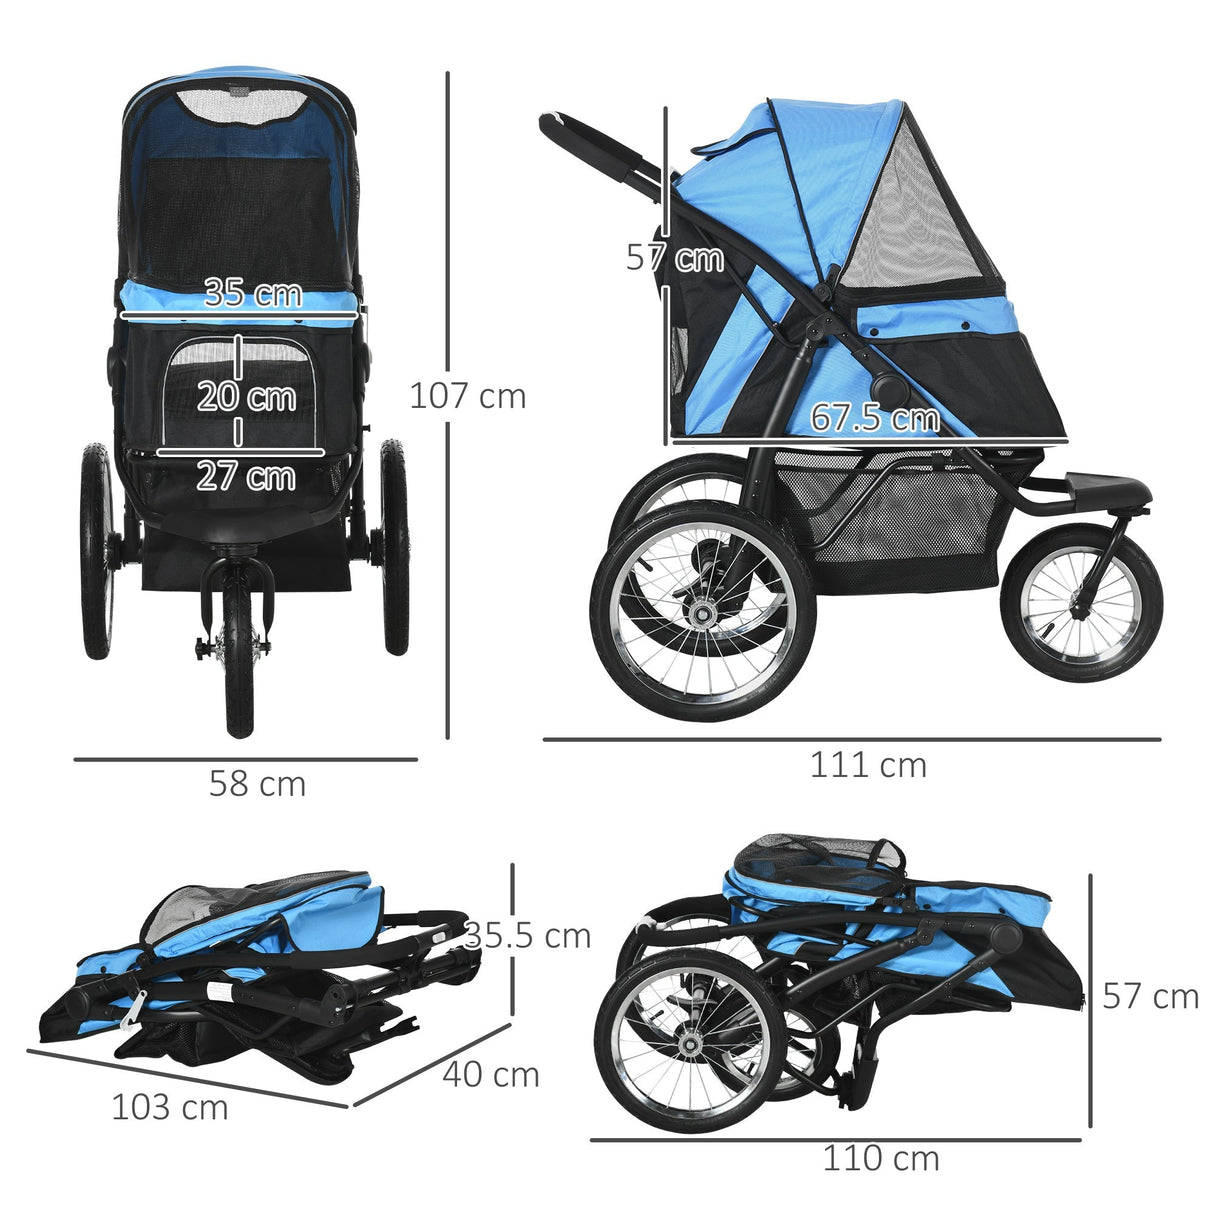 Three-Wheel Foldable Pet Stroller for Small/Medium Dogs, PawHut, Blue